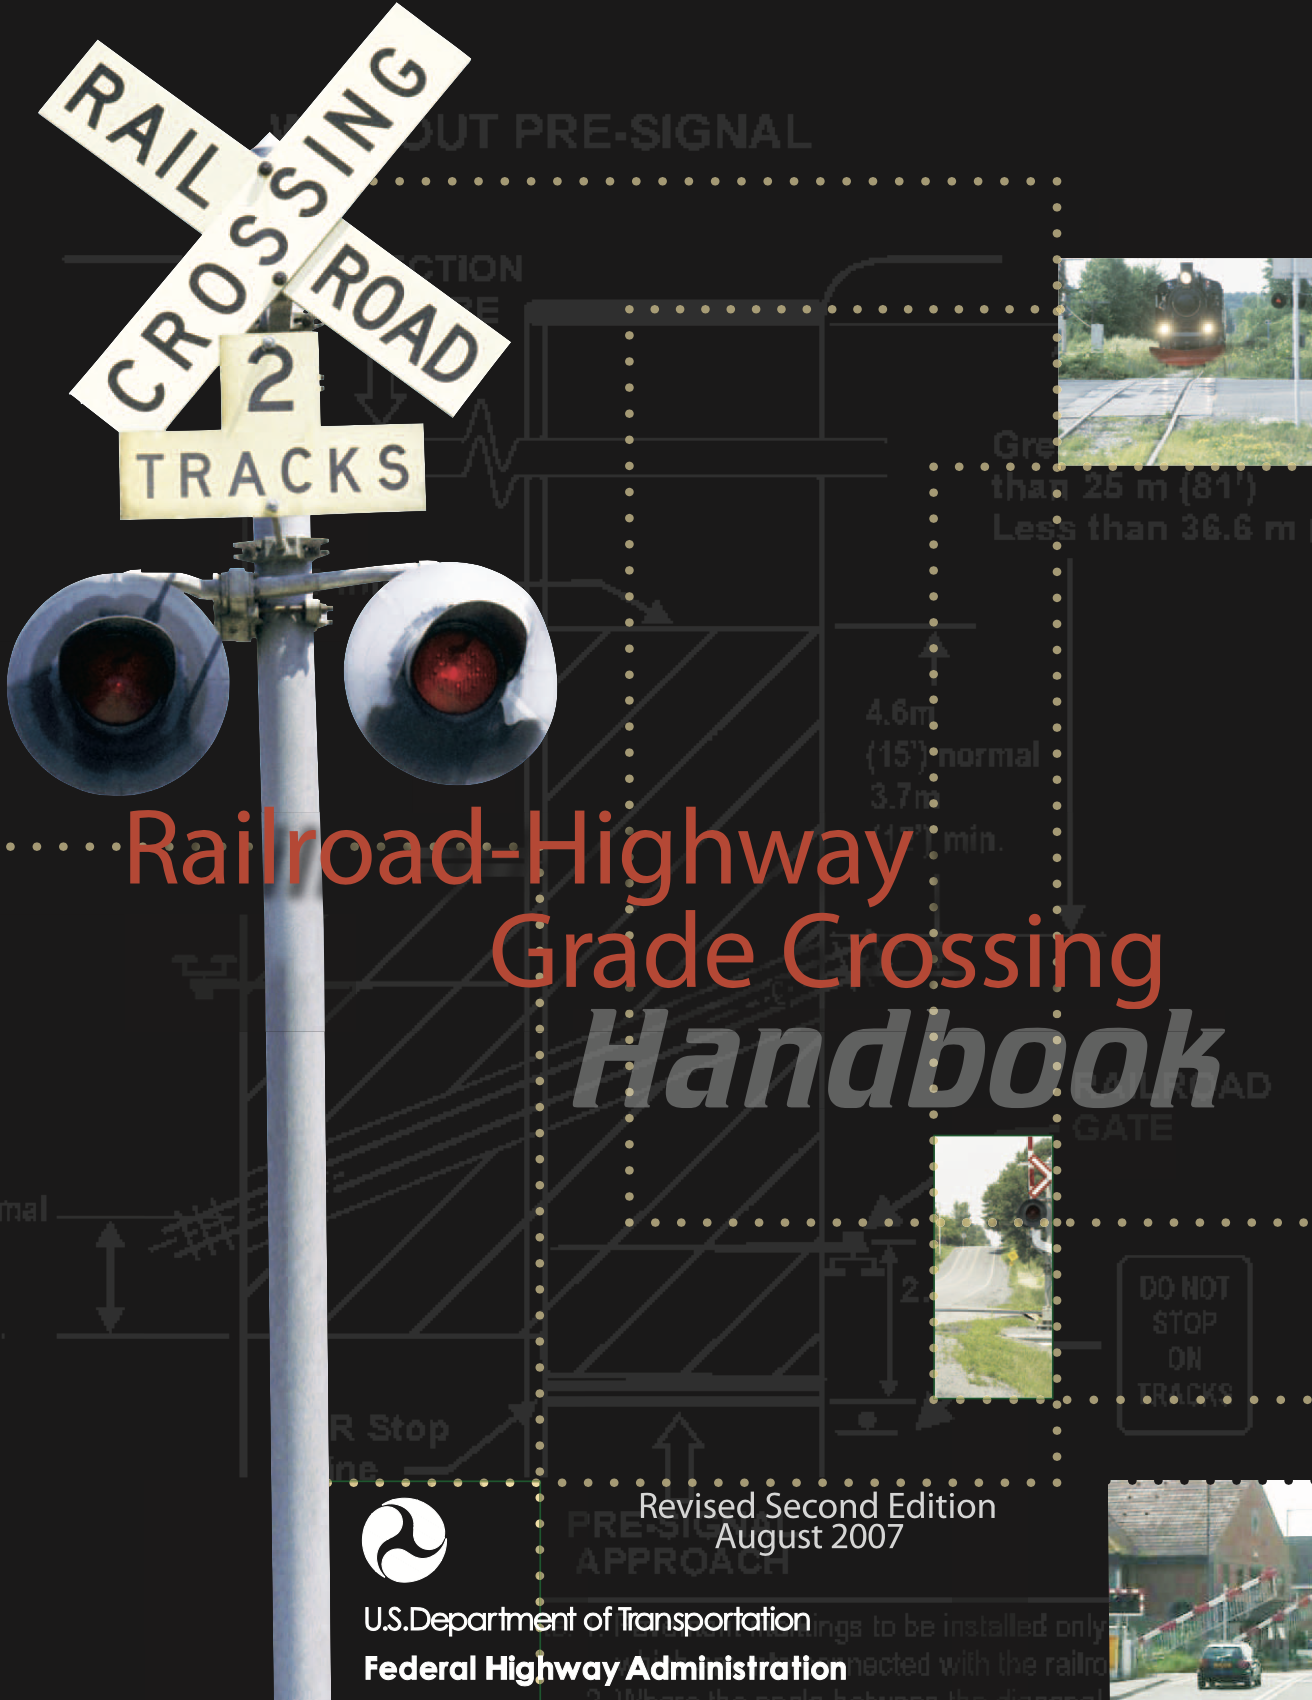 Railroad-Highway Grade Crossing Handbook (Revised 2nd Edition- Aug 2007) [PUB]